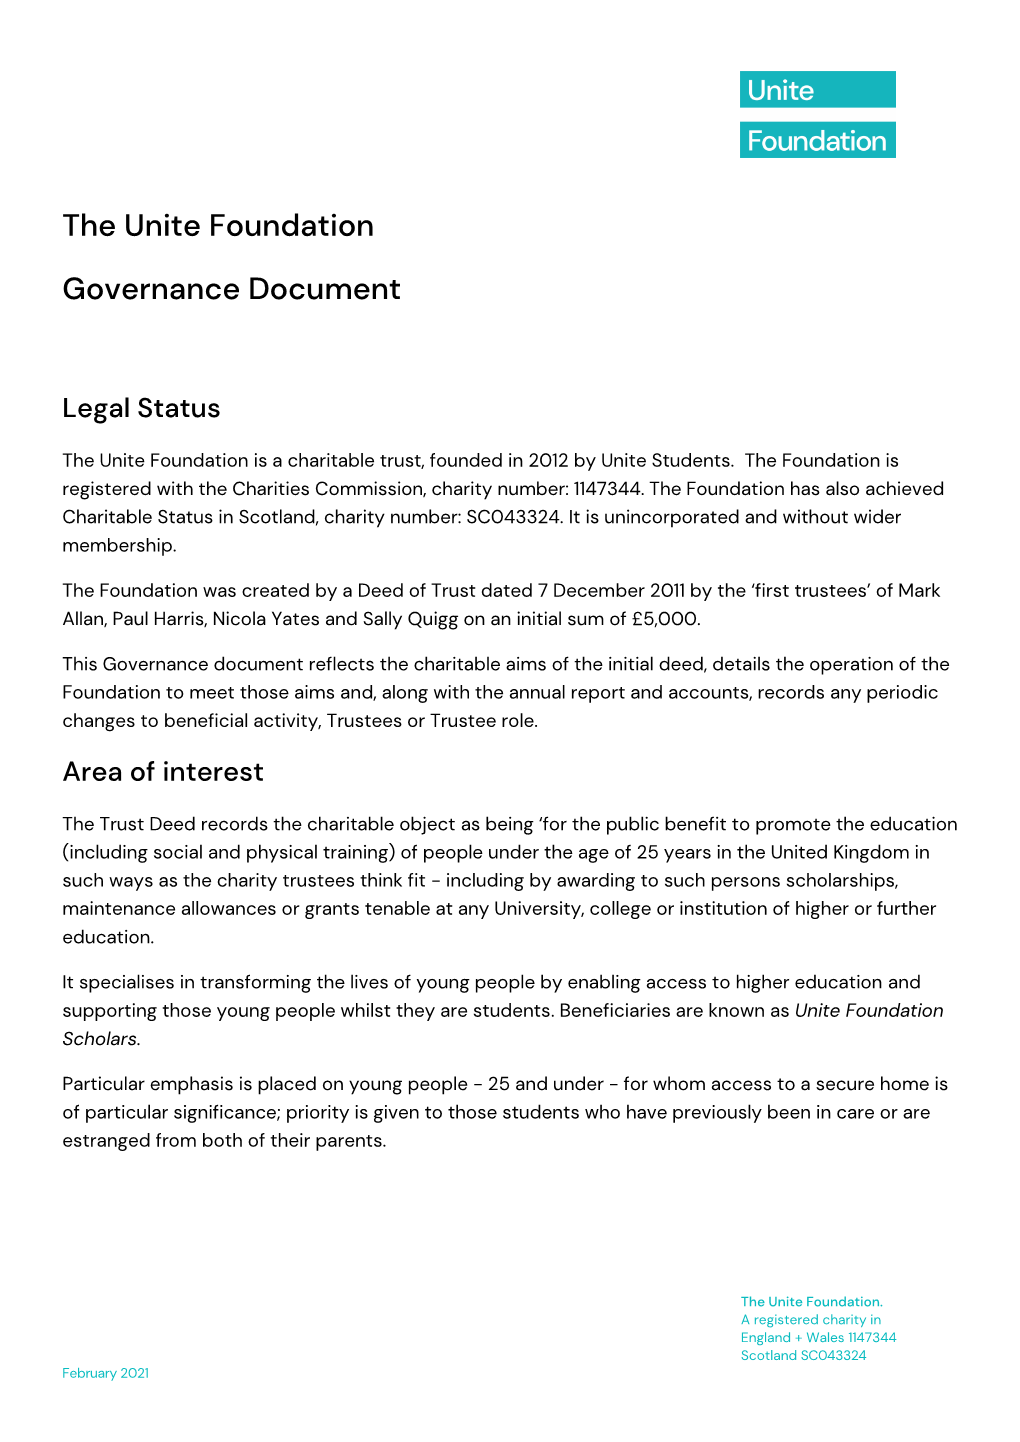 The Unite Foundation Governance Document